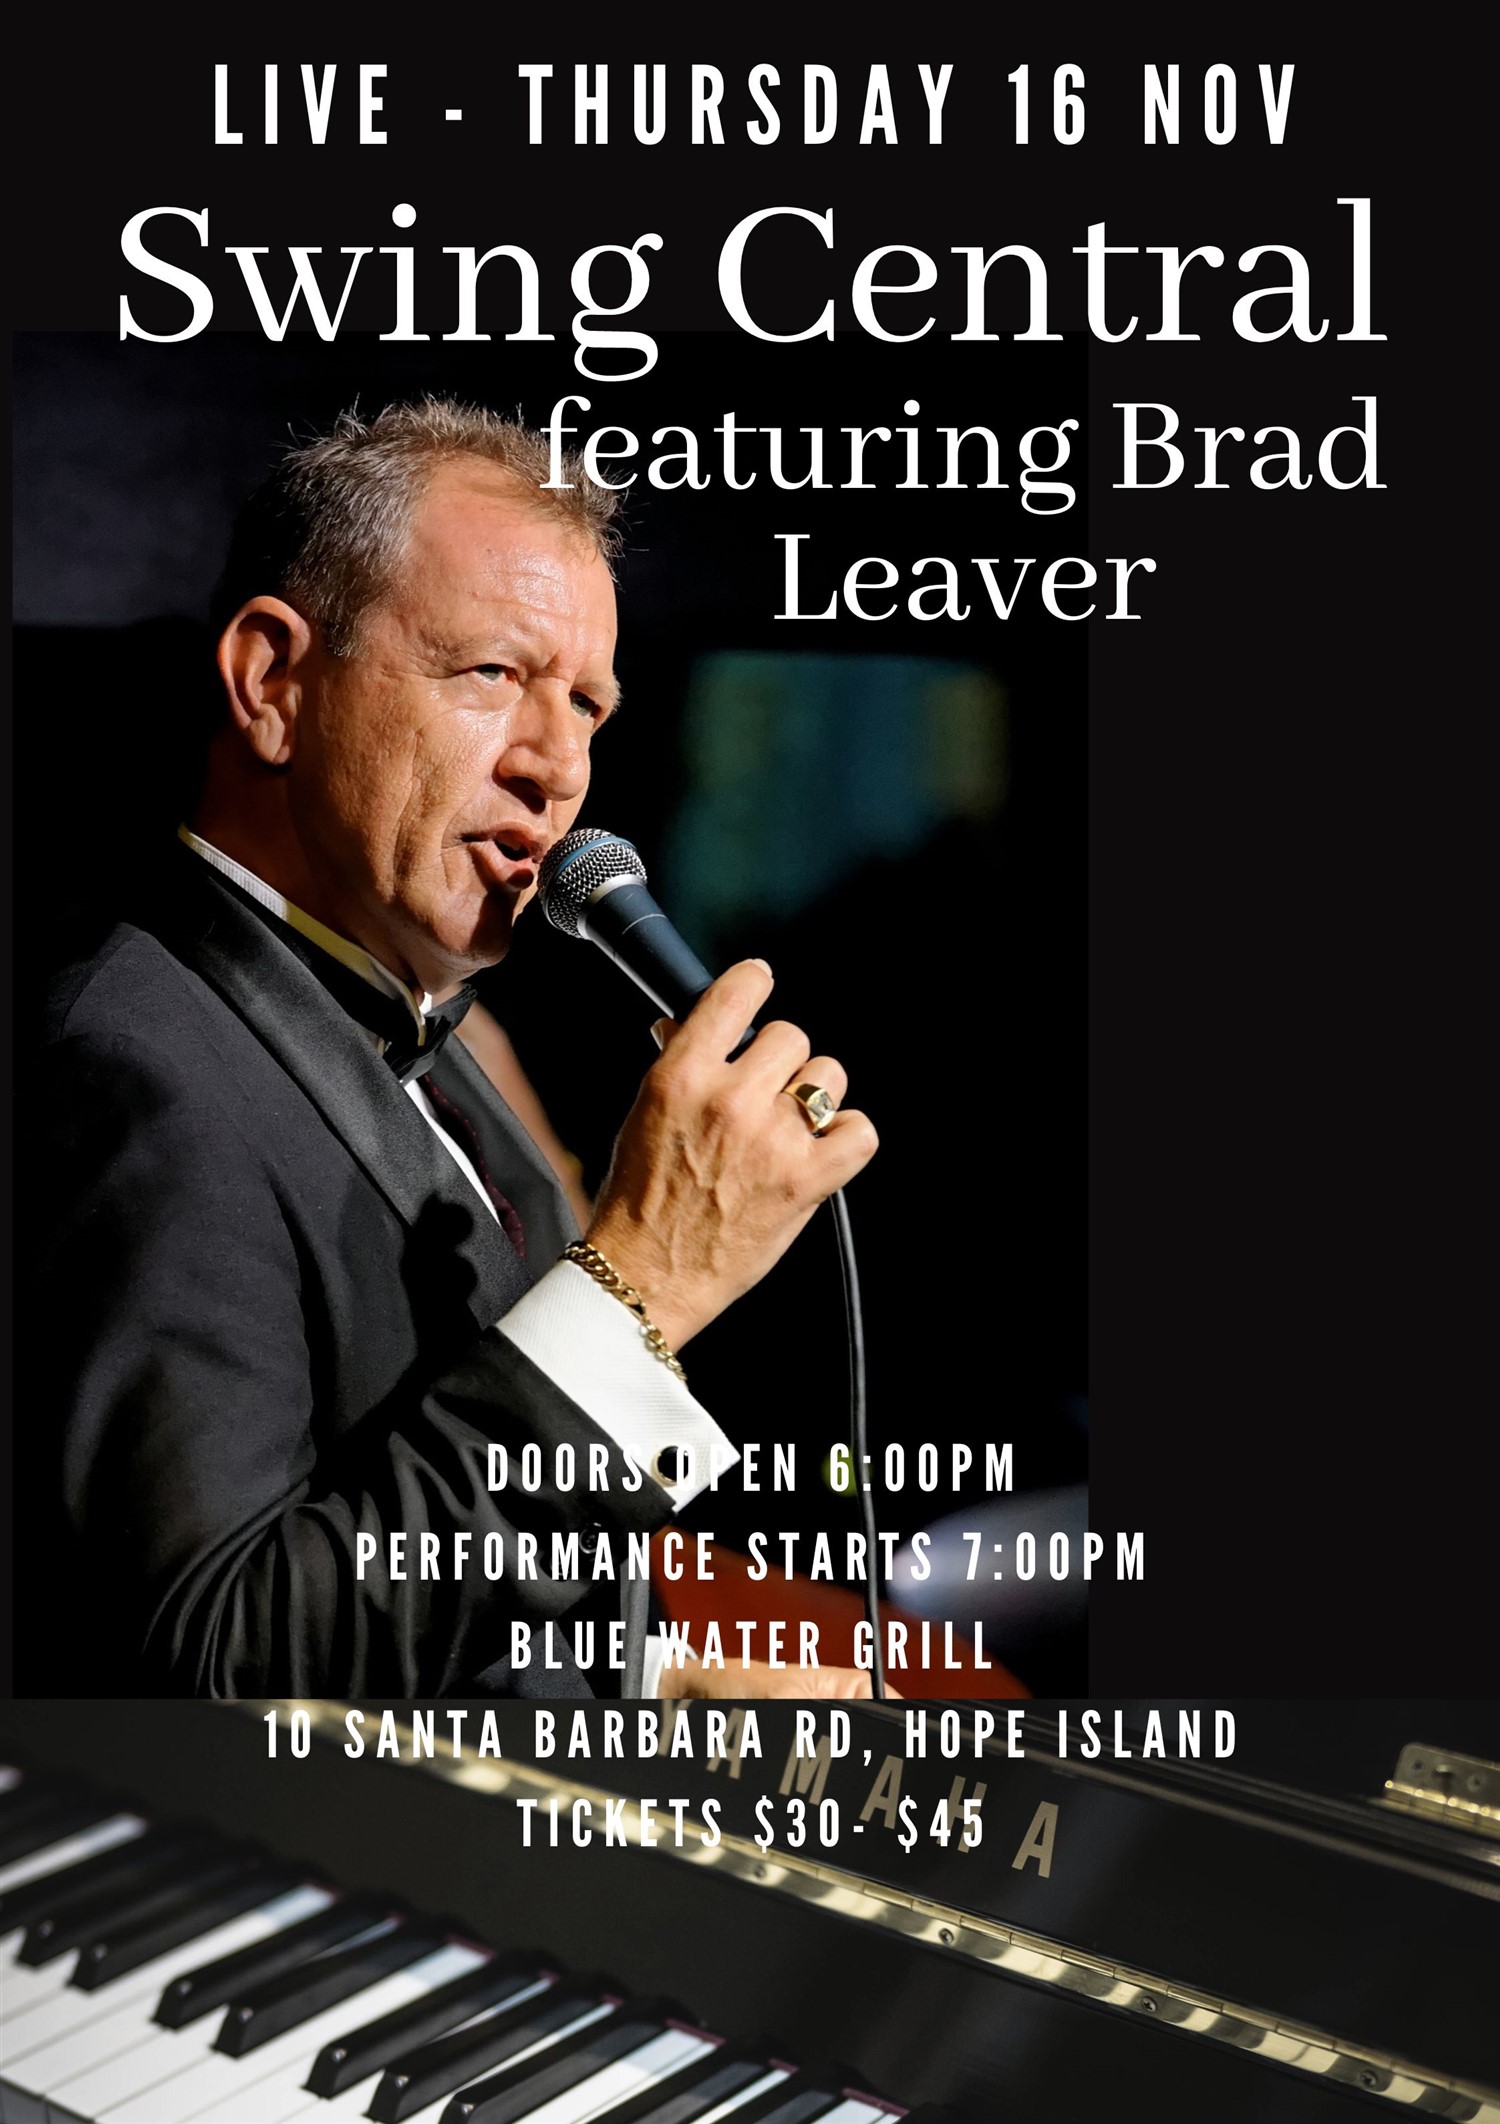 Swing Central featuring Brad Leaver  on nov. 16, 18:00@Hope Island Jazz - Blue Water Grill - Achetez des billets et obtenez des informations surHope Island Jazz hopeislandjazz.com.au